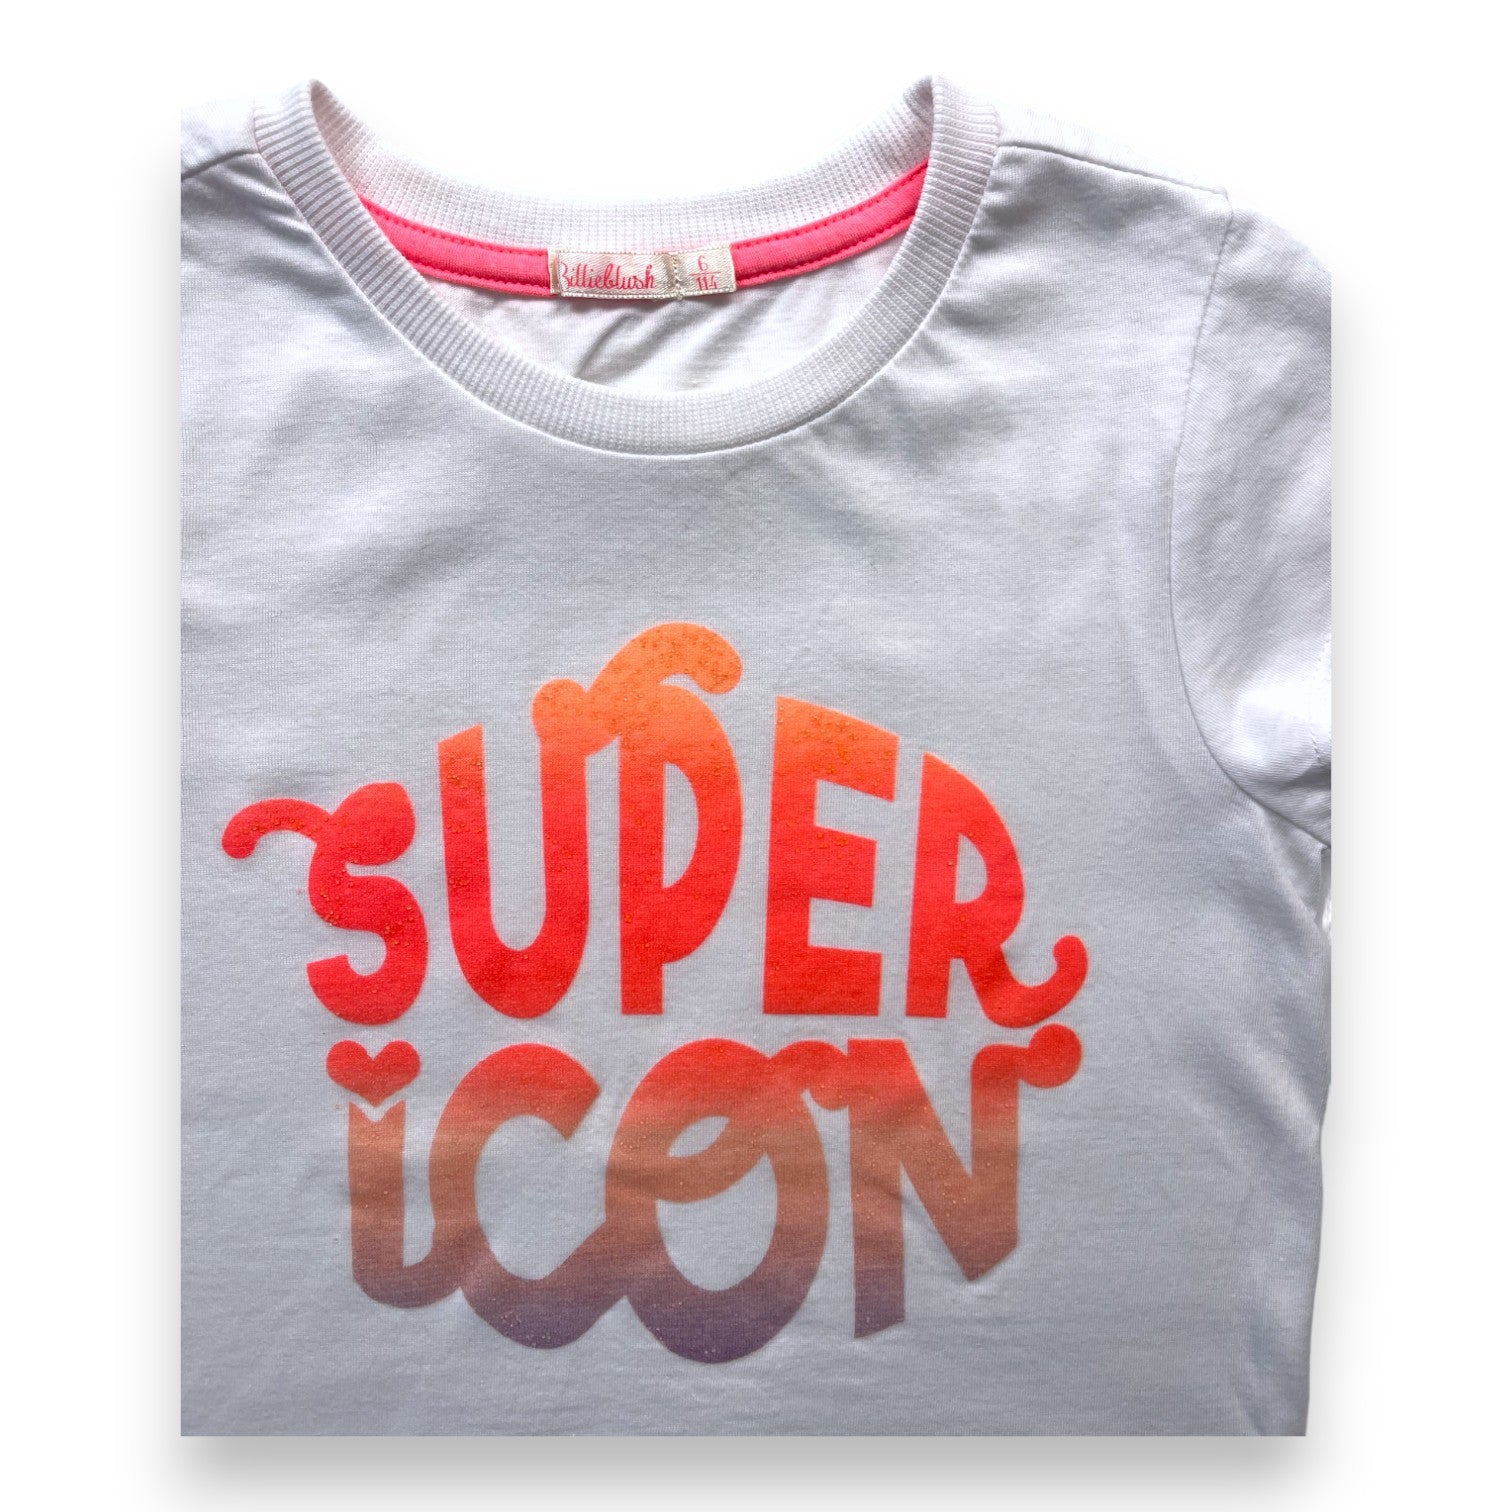 BILLIEBLUSH - T shirt blanc "Super icon" - 6 ans